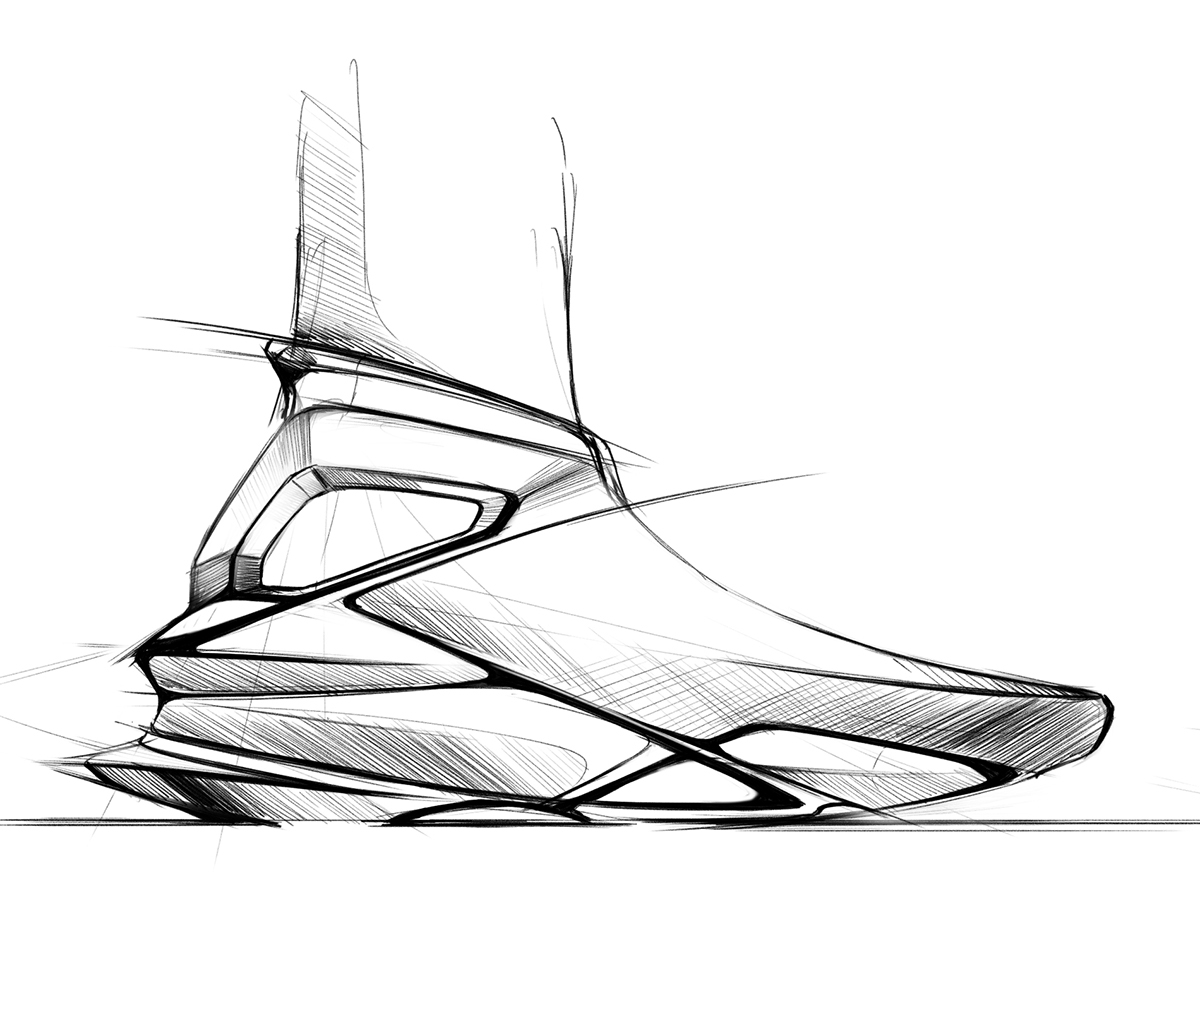 footwear. design. doodle. sketch. industrial design.